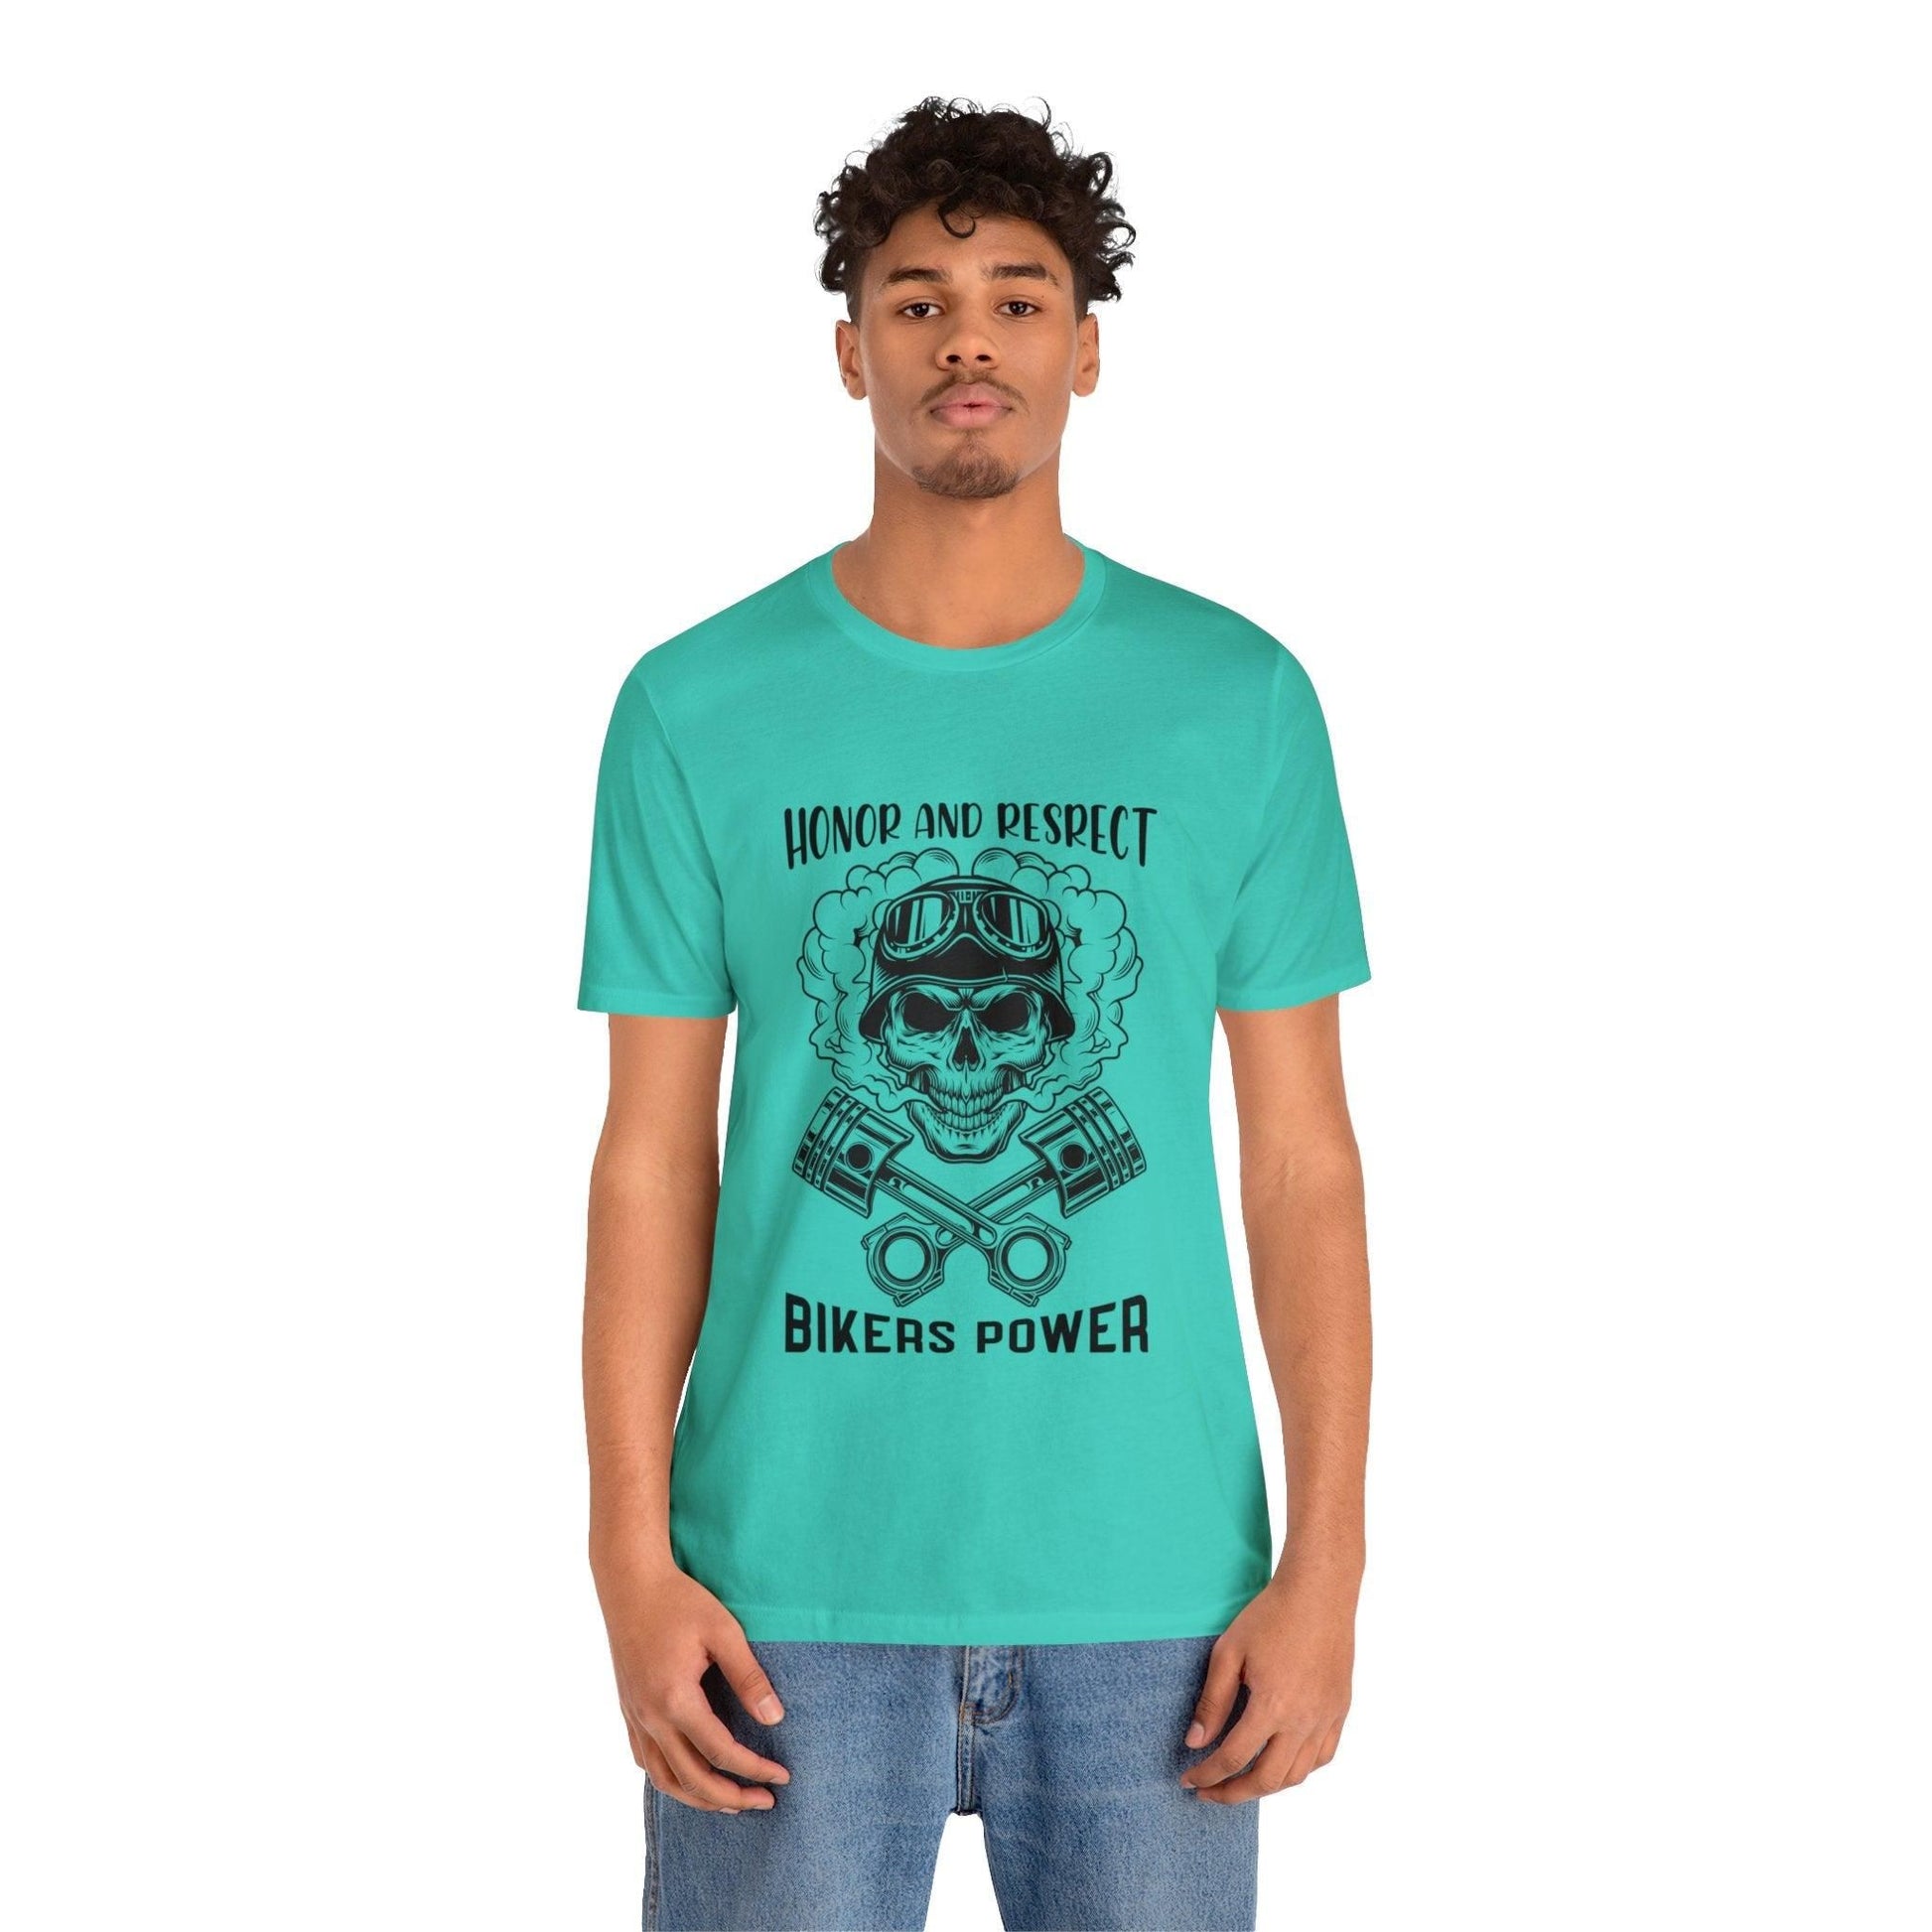 Bikers Power Unisex Tee T-Shirt Teal S 